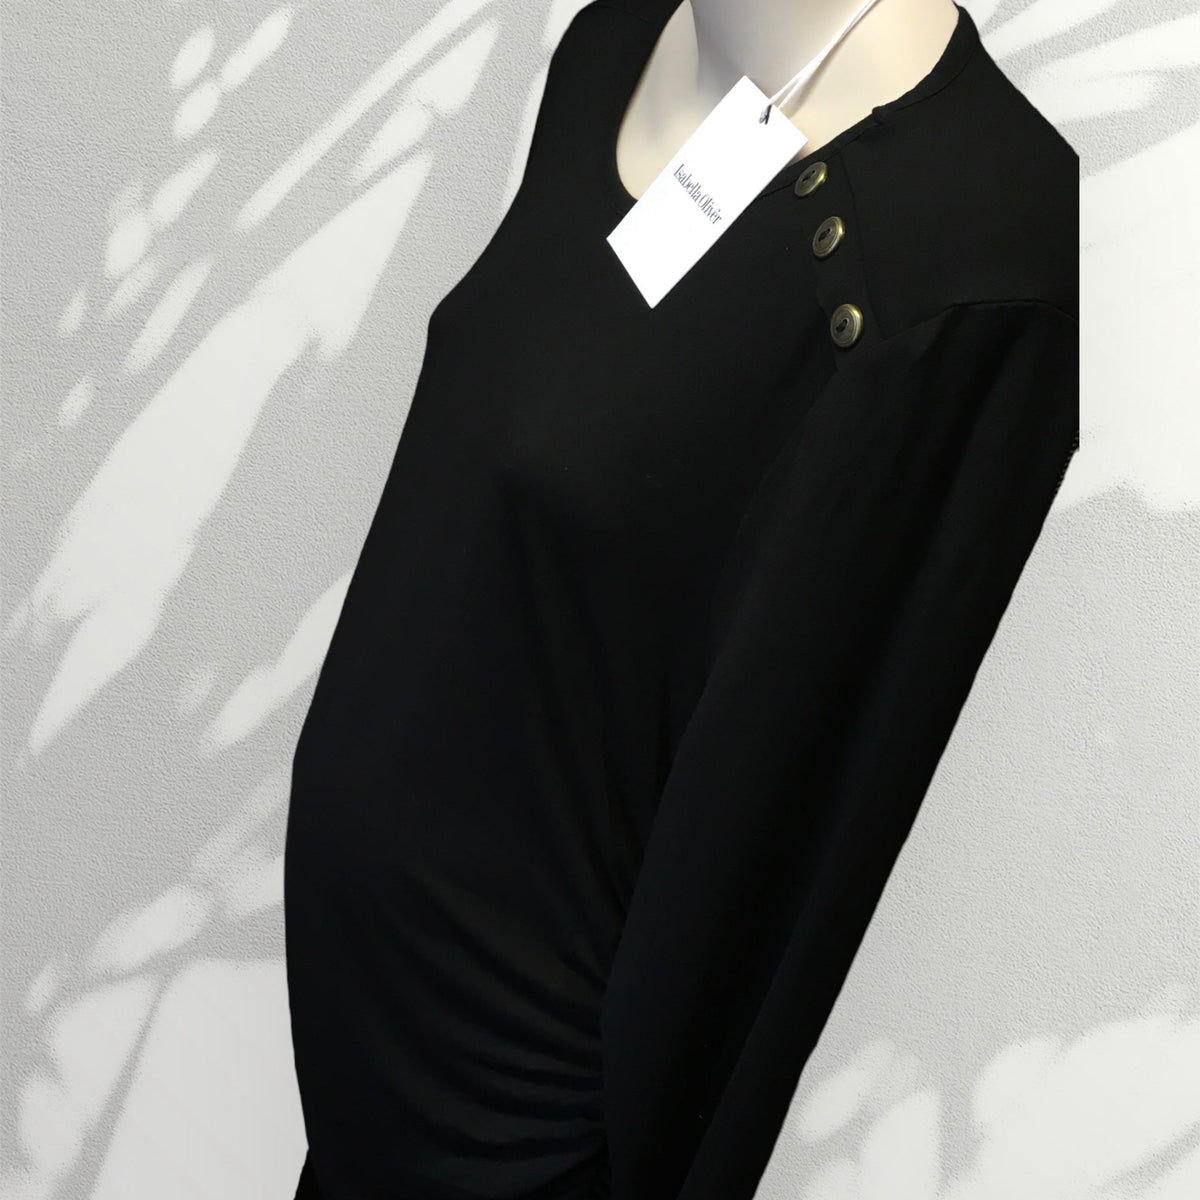 Isabella Oliver Dottie Maternity Dress Black Size 8 Built in Bra Stretch  Ruched